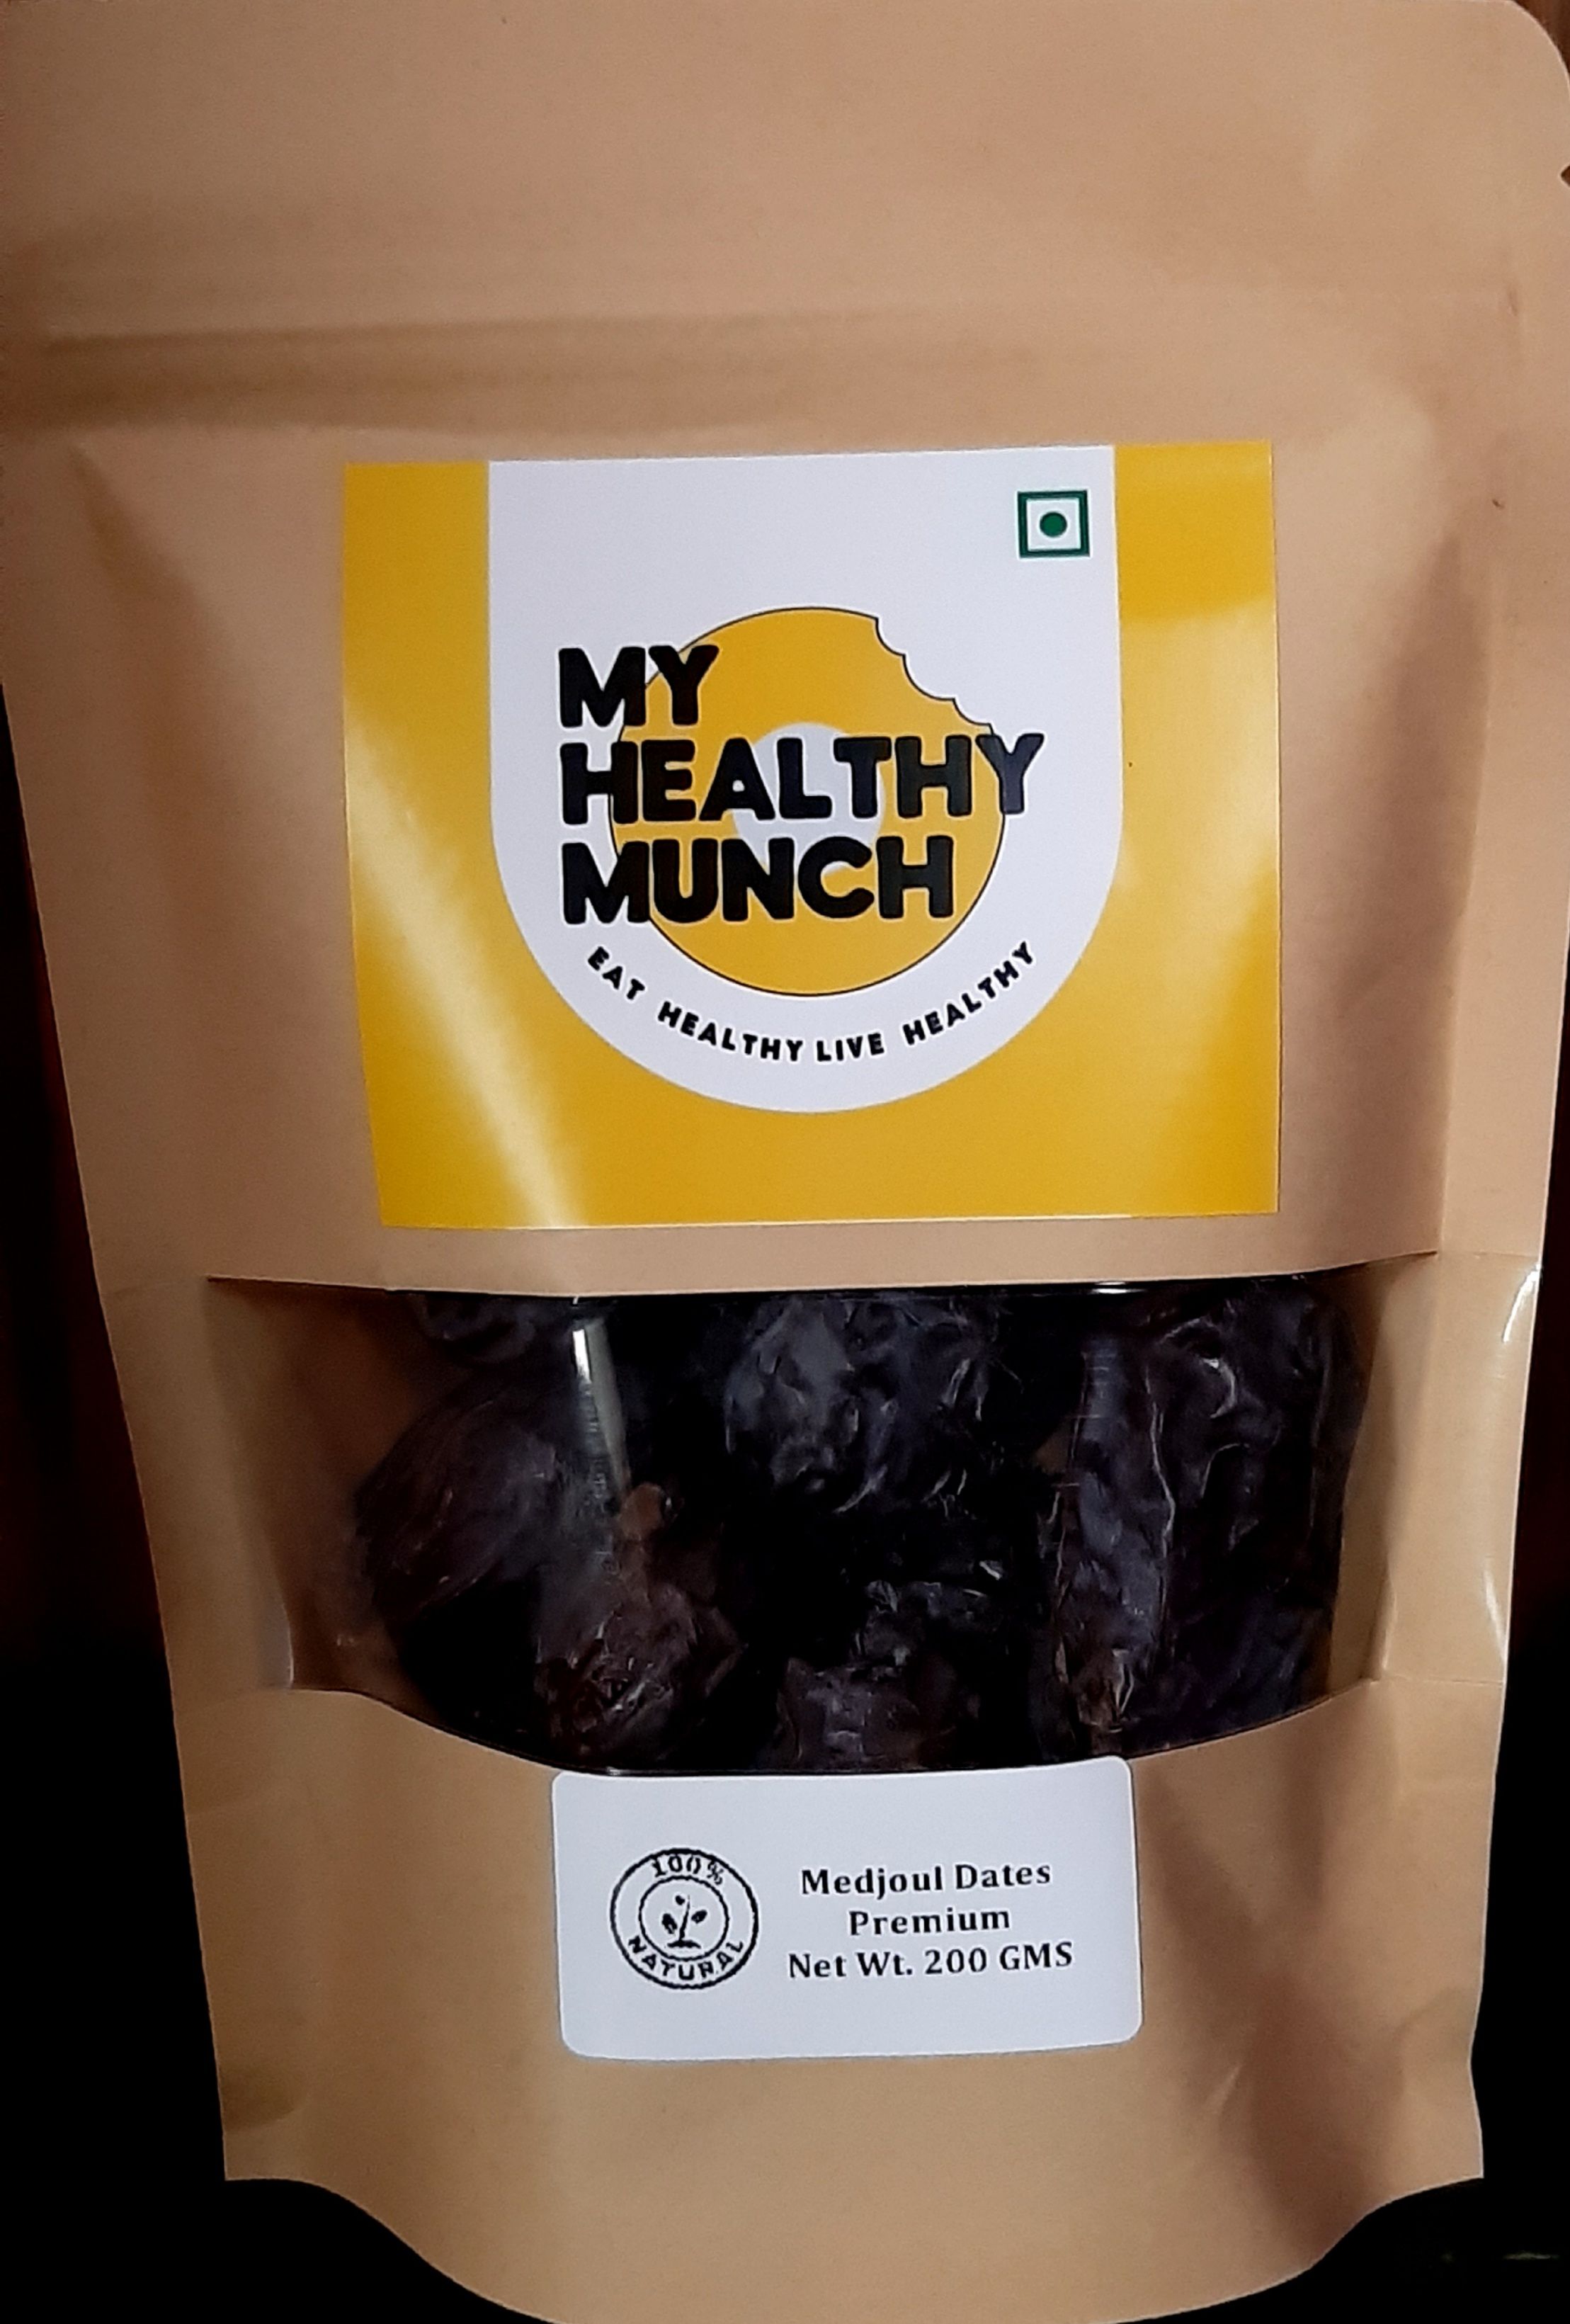 Buy Healthy Munch Premium Medjoul Dates 200 gms at Best Price Online